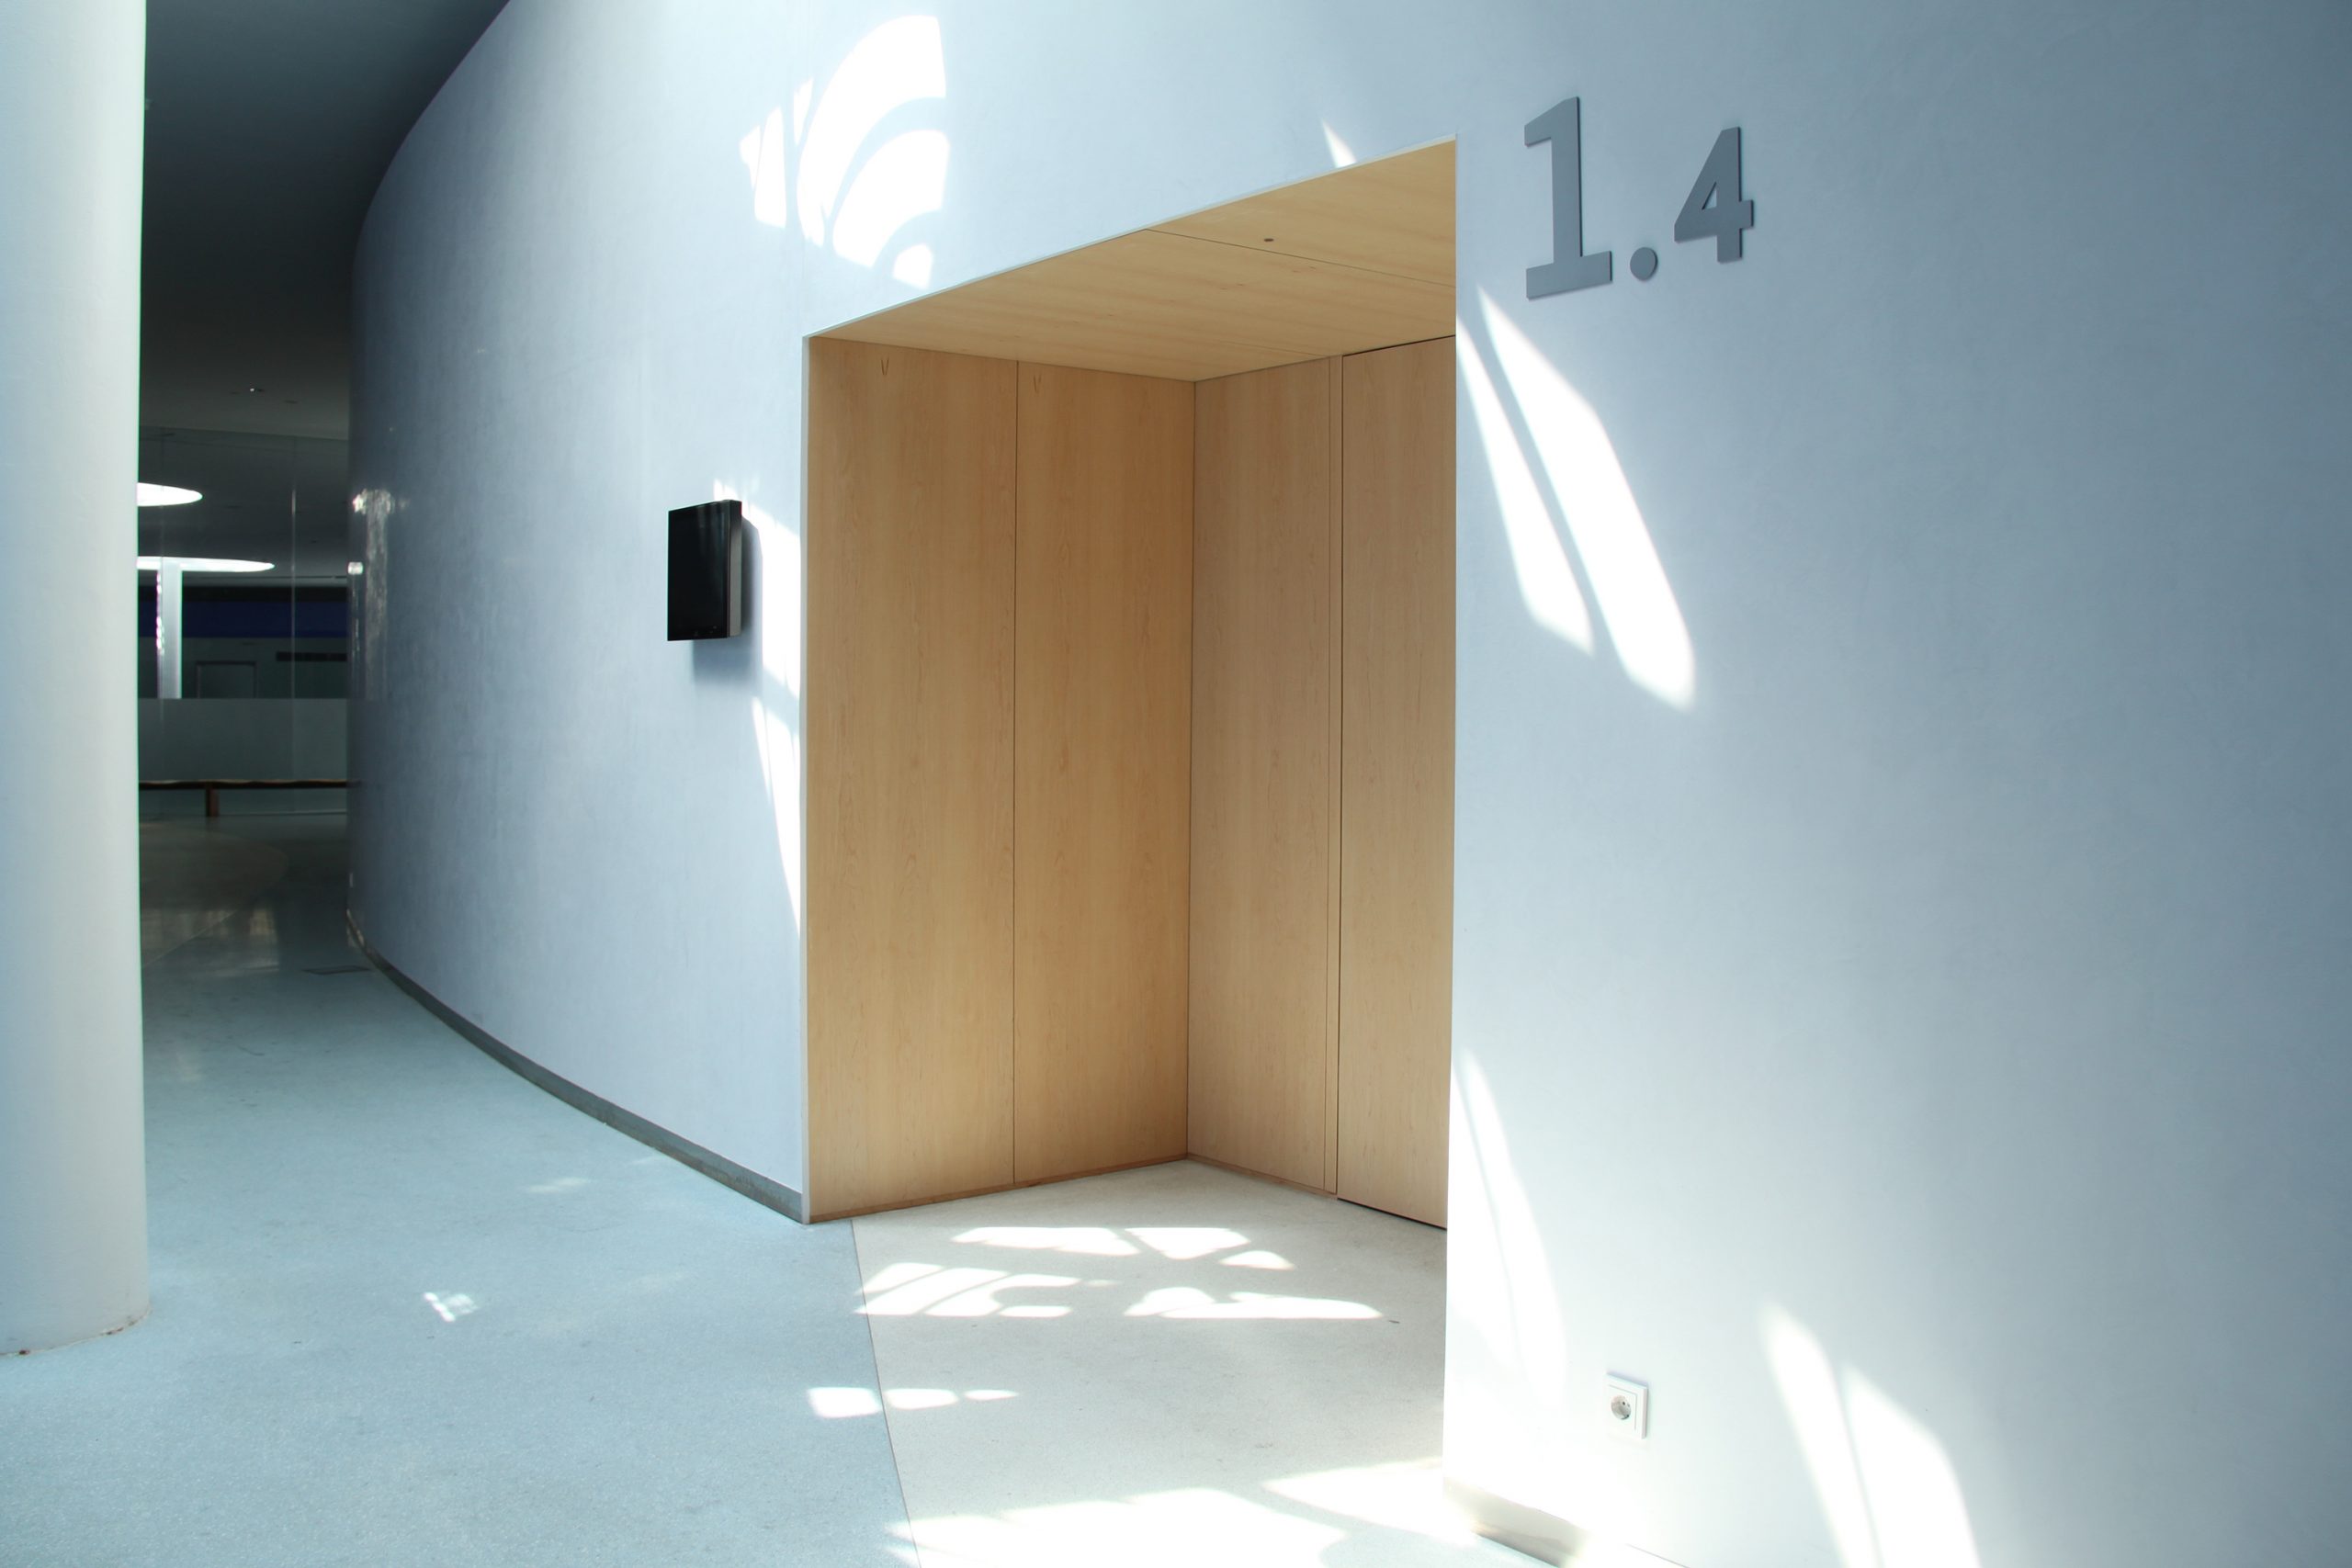 CC1 - Room 1.4 Entrance